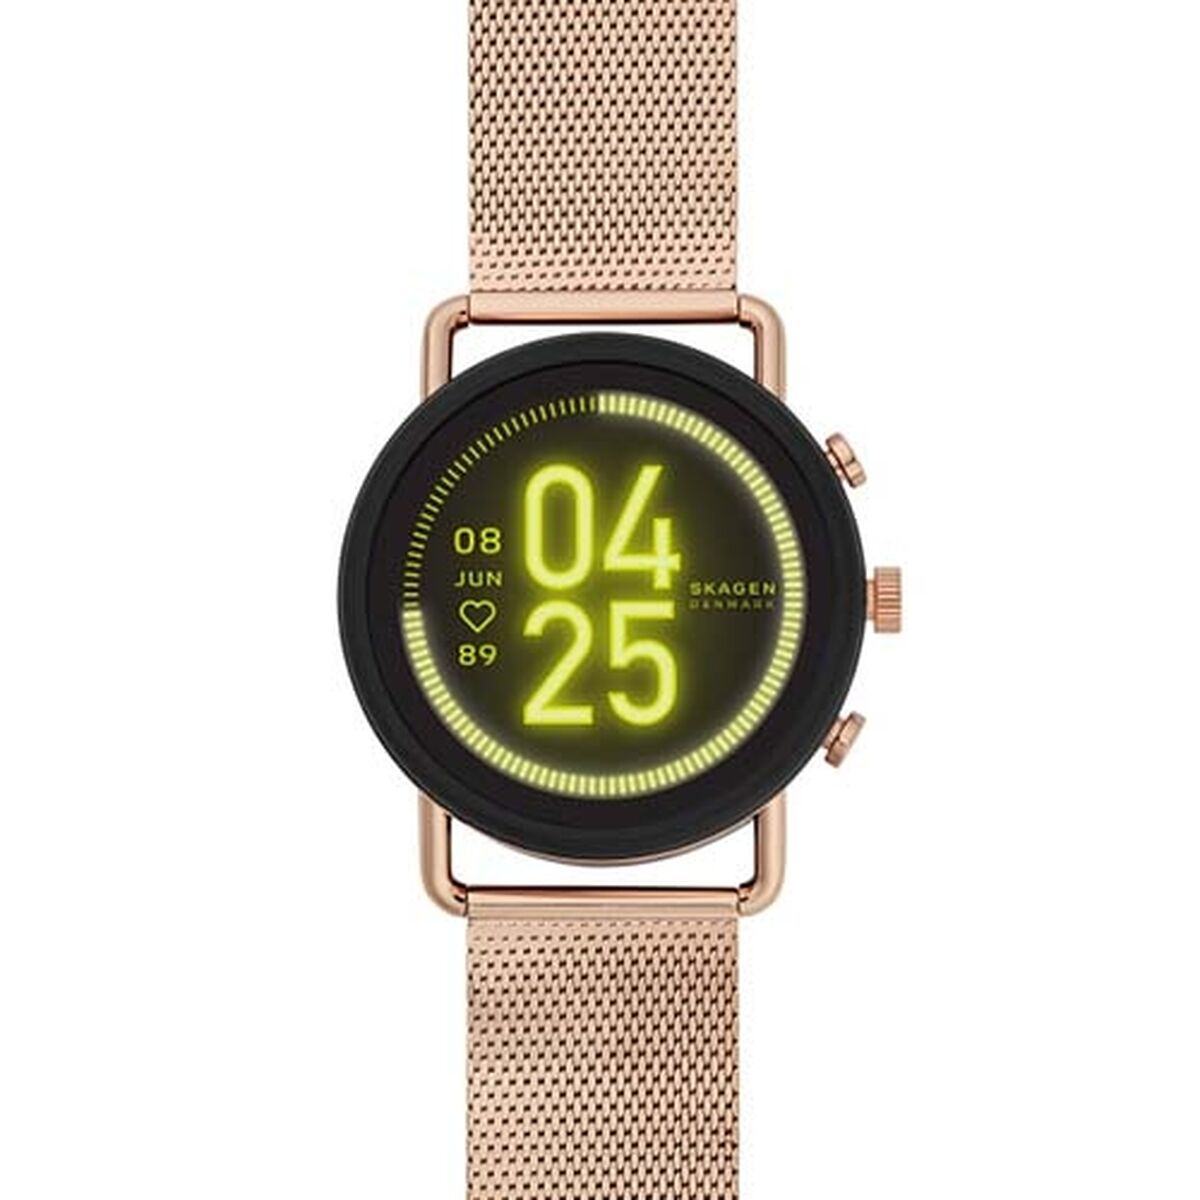 Kaufe Smartwatch Skagen Gen. 5 bei AWK Flagship um € 179.60